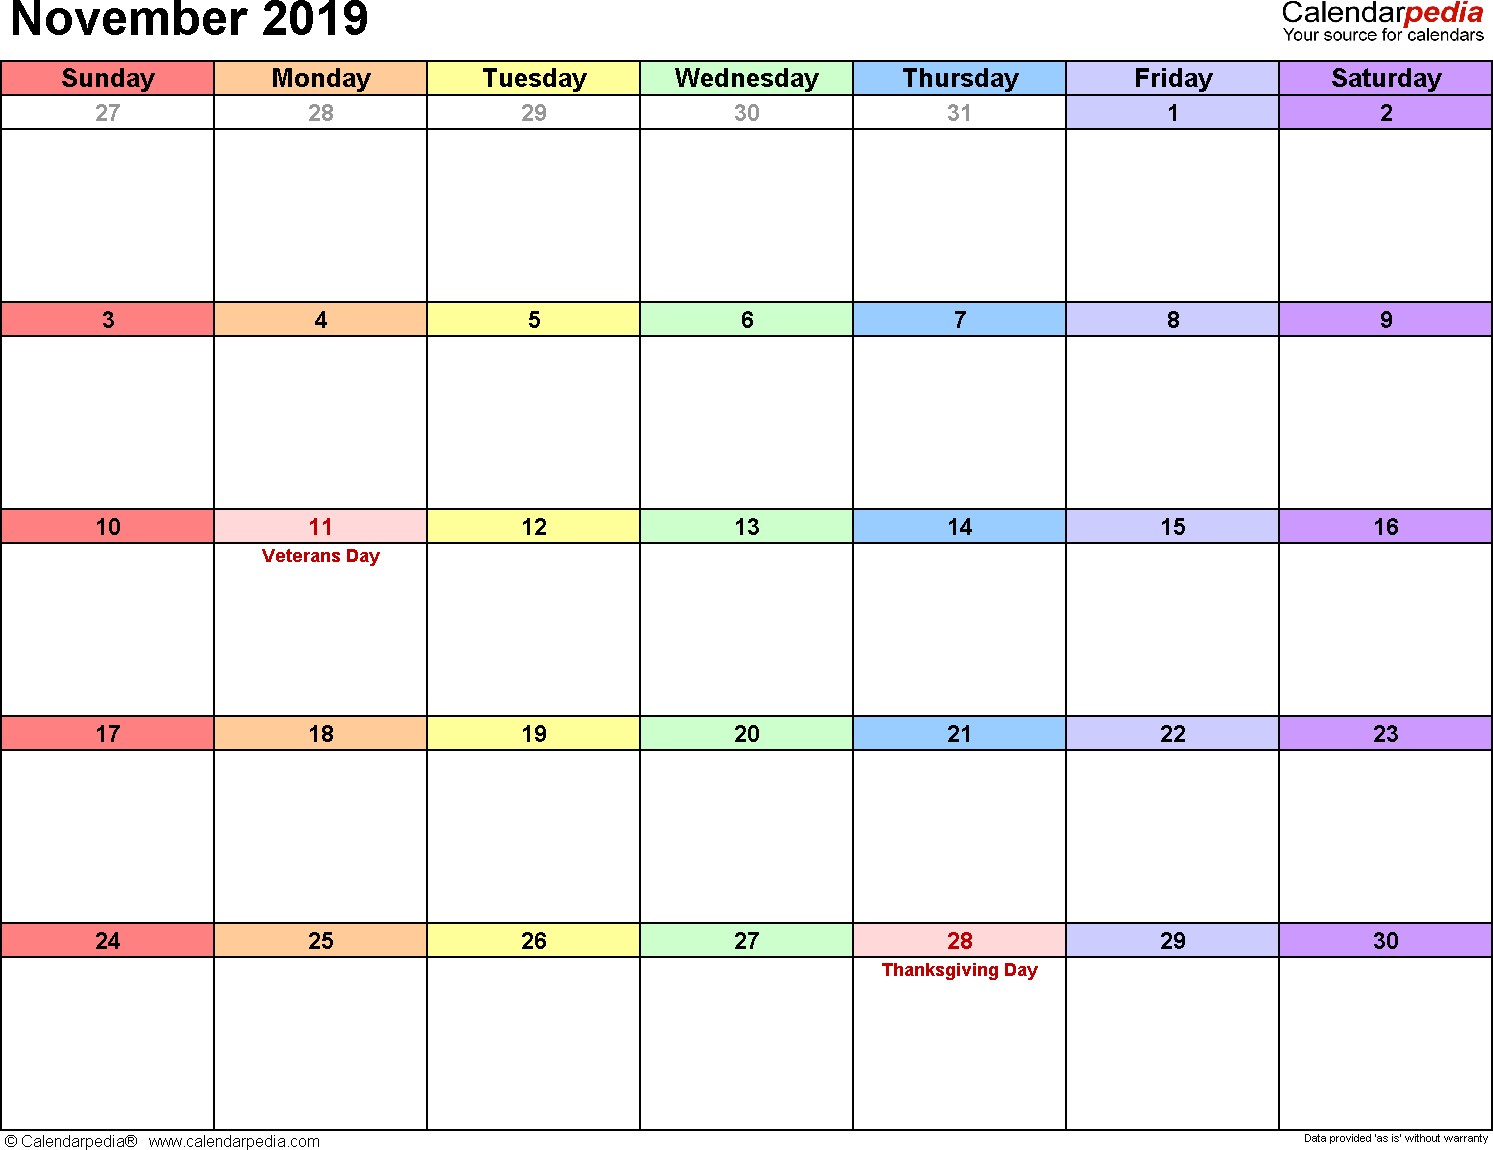 November 2019 Calendars for Word Excel & PDF